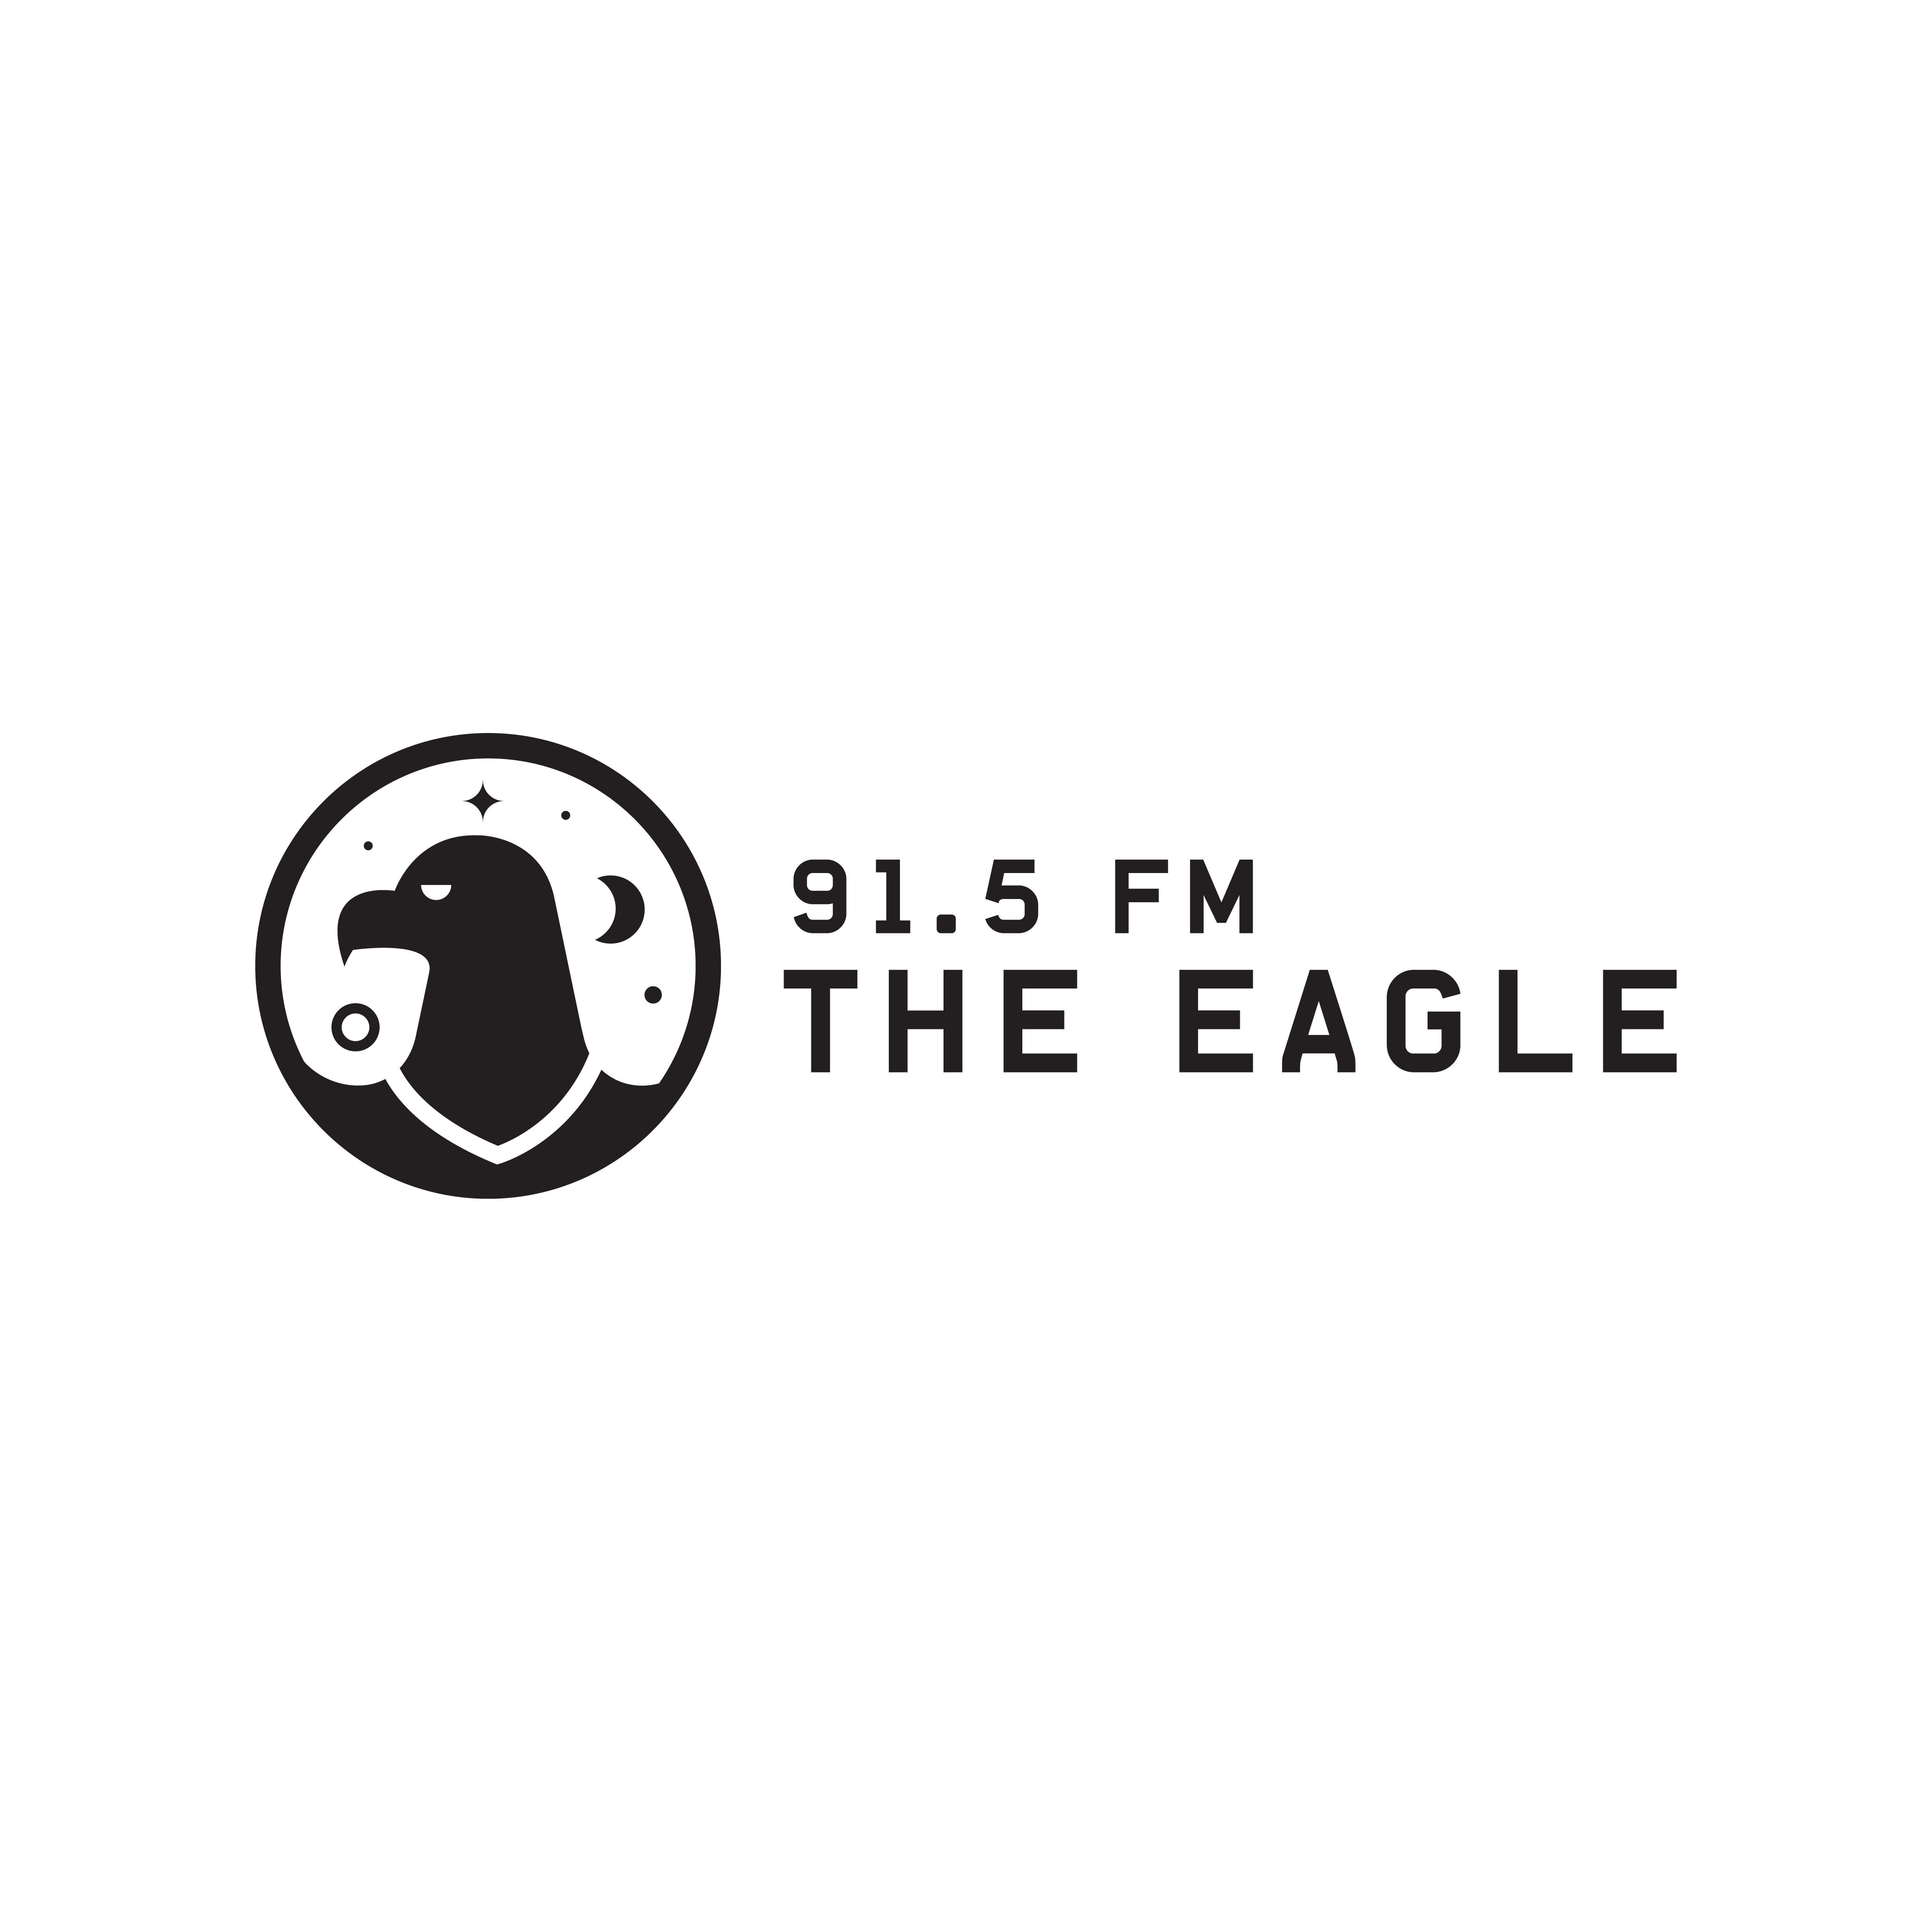 WJHS 91.5 FM - The Eagle